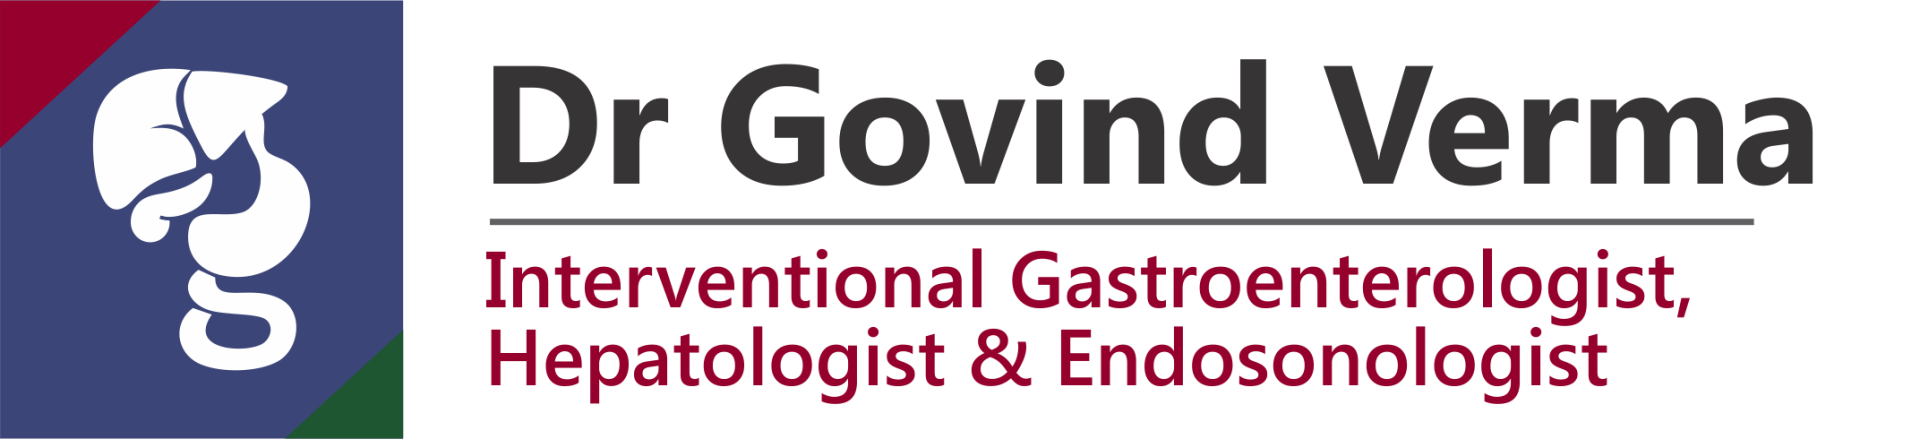 Dr Govind Verma | Best Gastroenterologist, Liver and Pancreas Expert in India